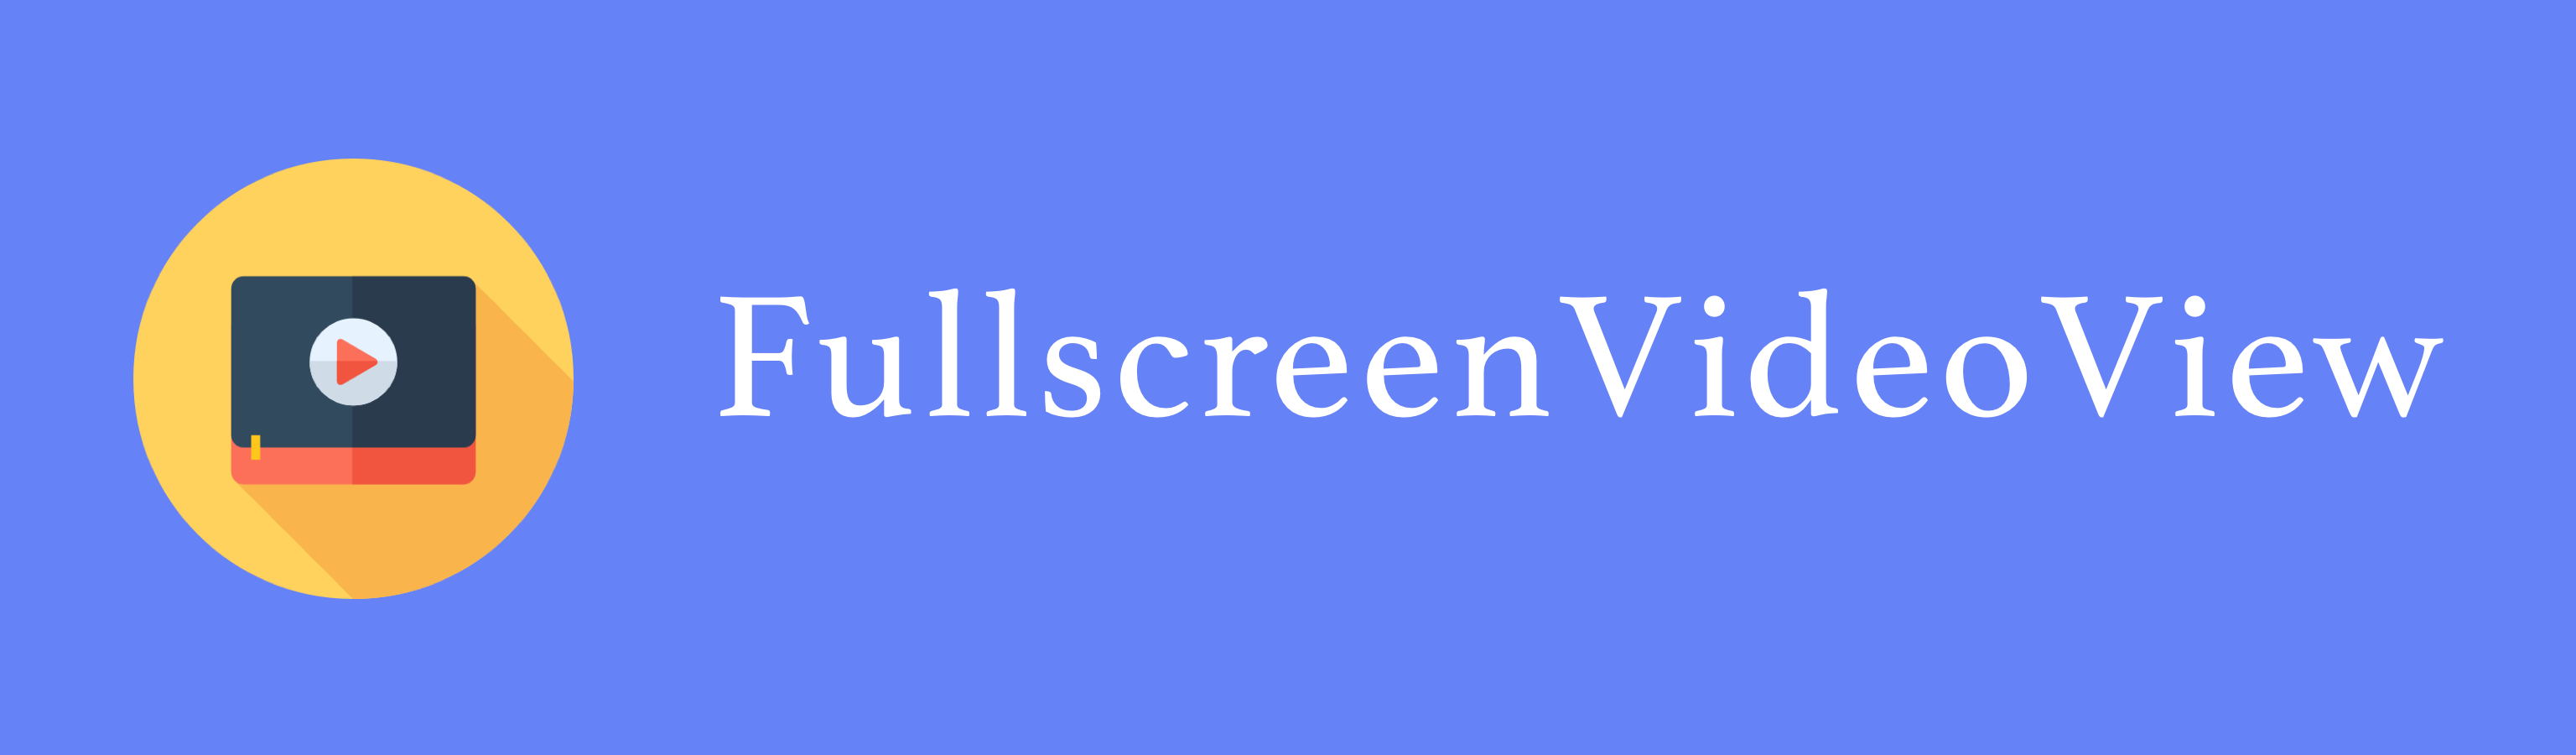 fullscreen-video-view